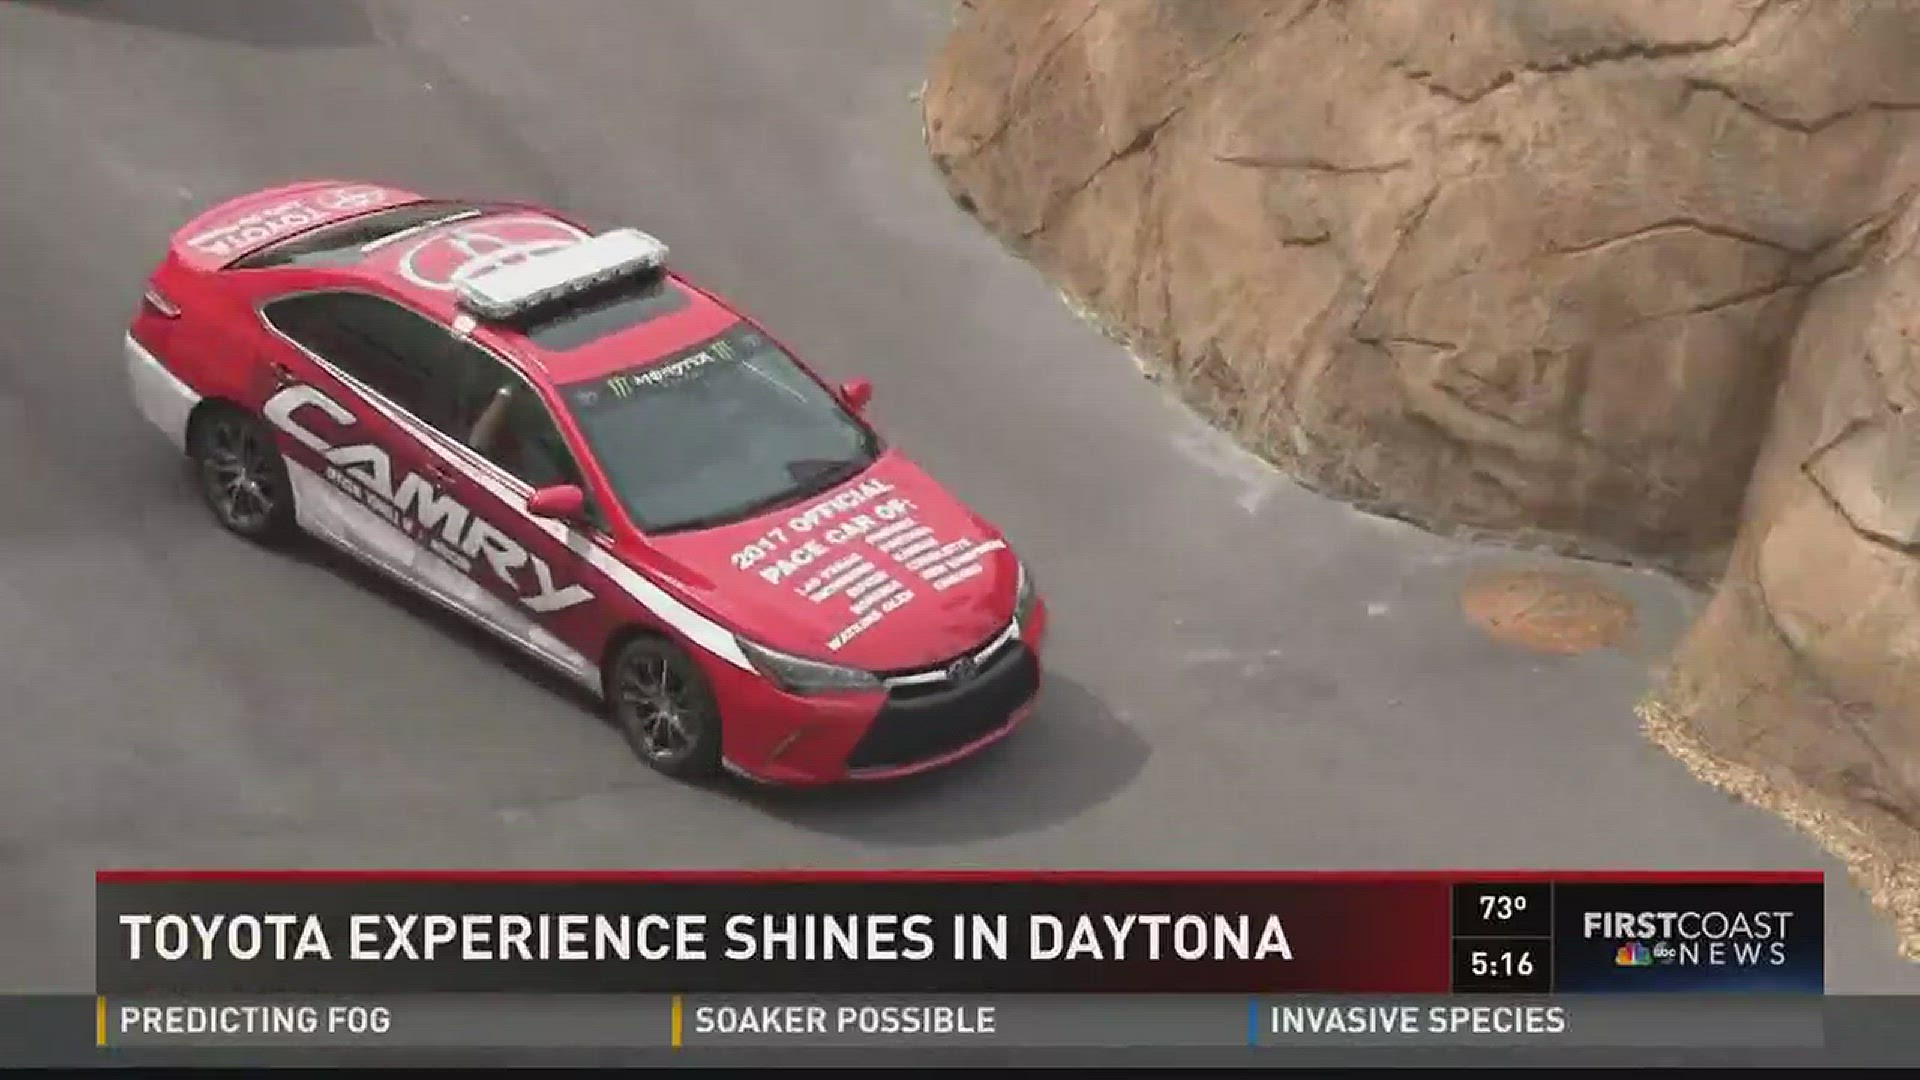 Toyota Experience shines in Daytona